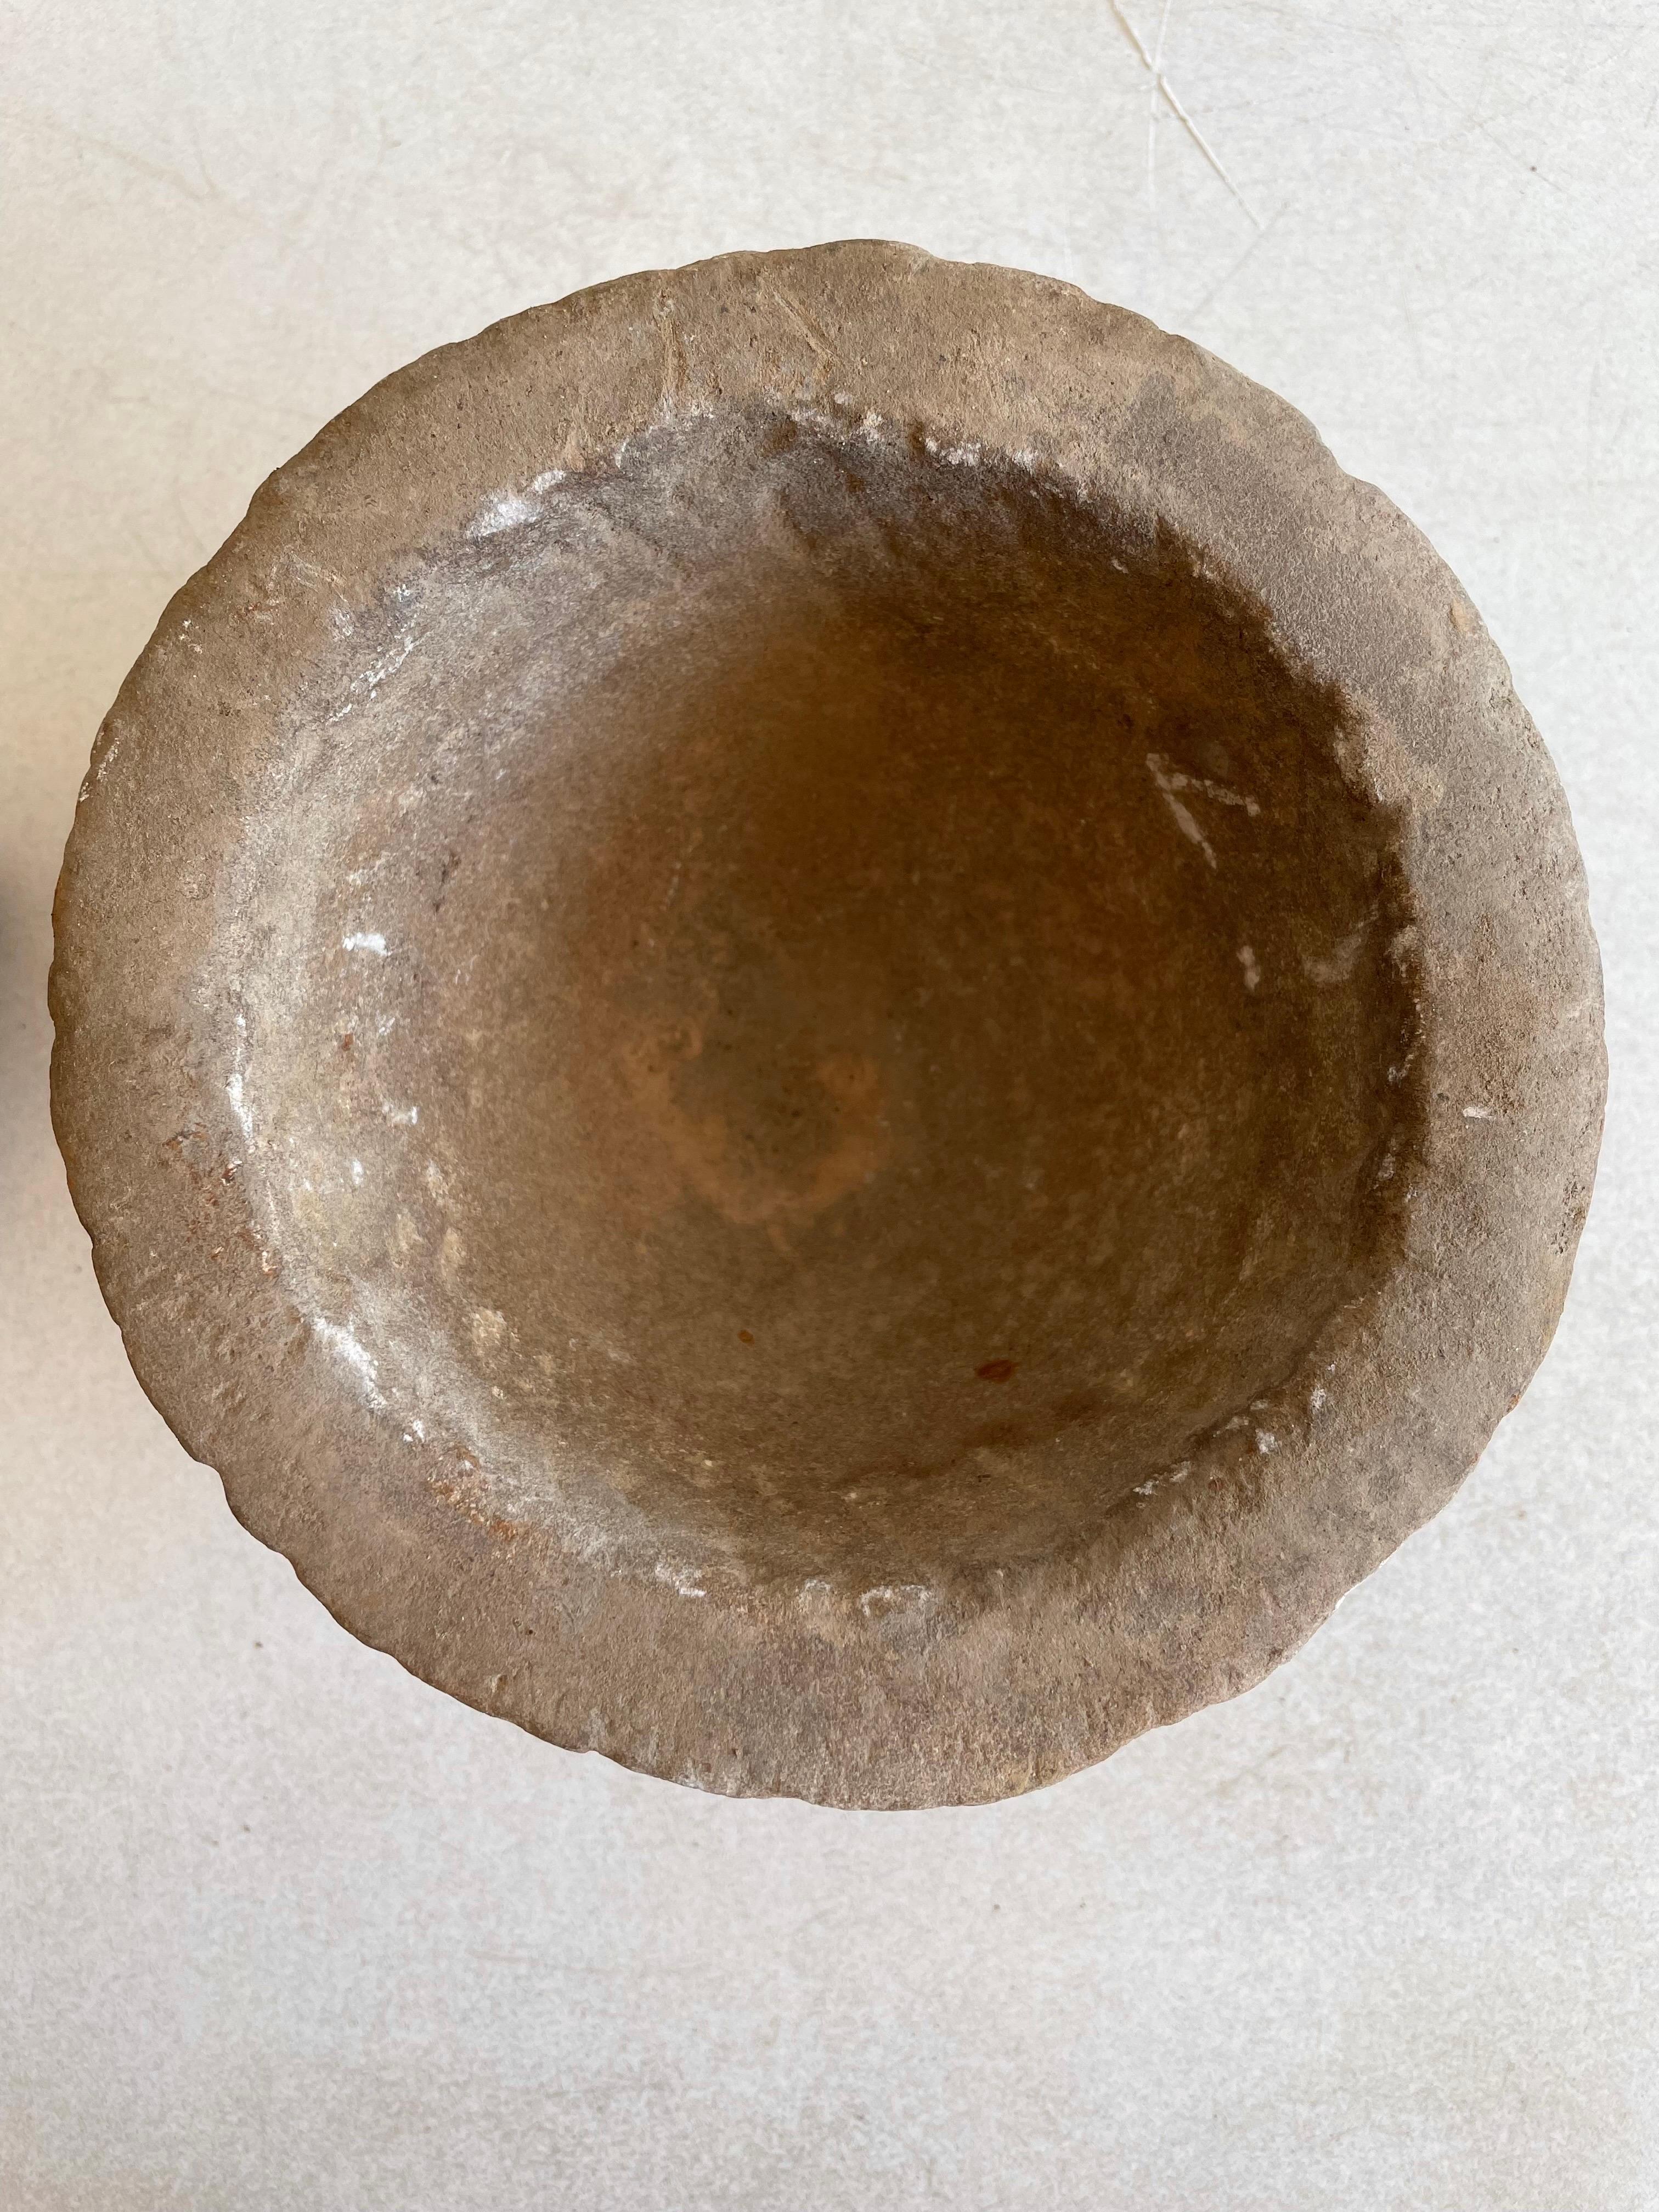 Antique Stone Mortar and Pestle Bowl Set 2